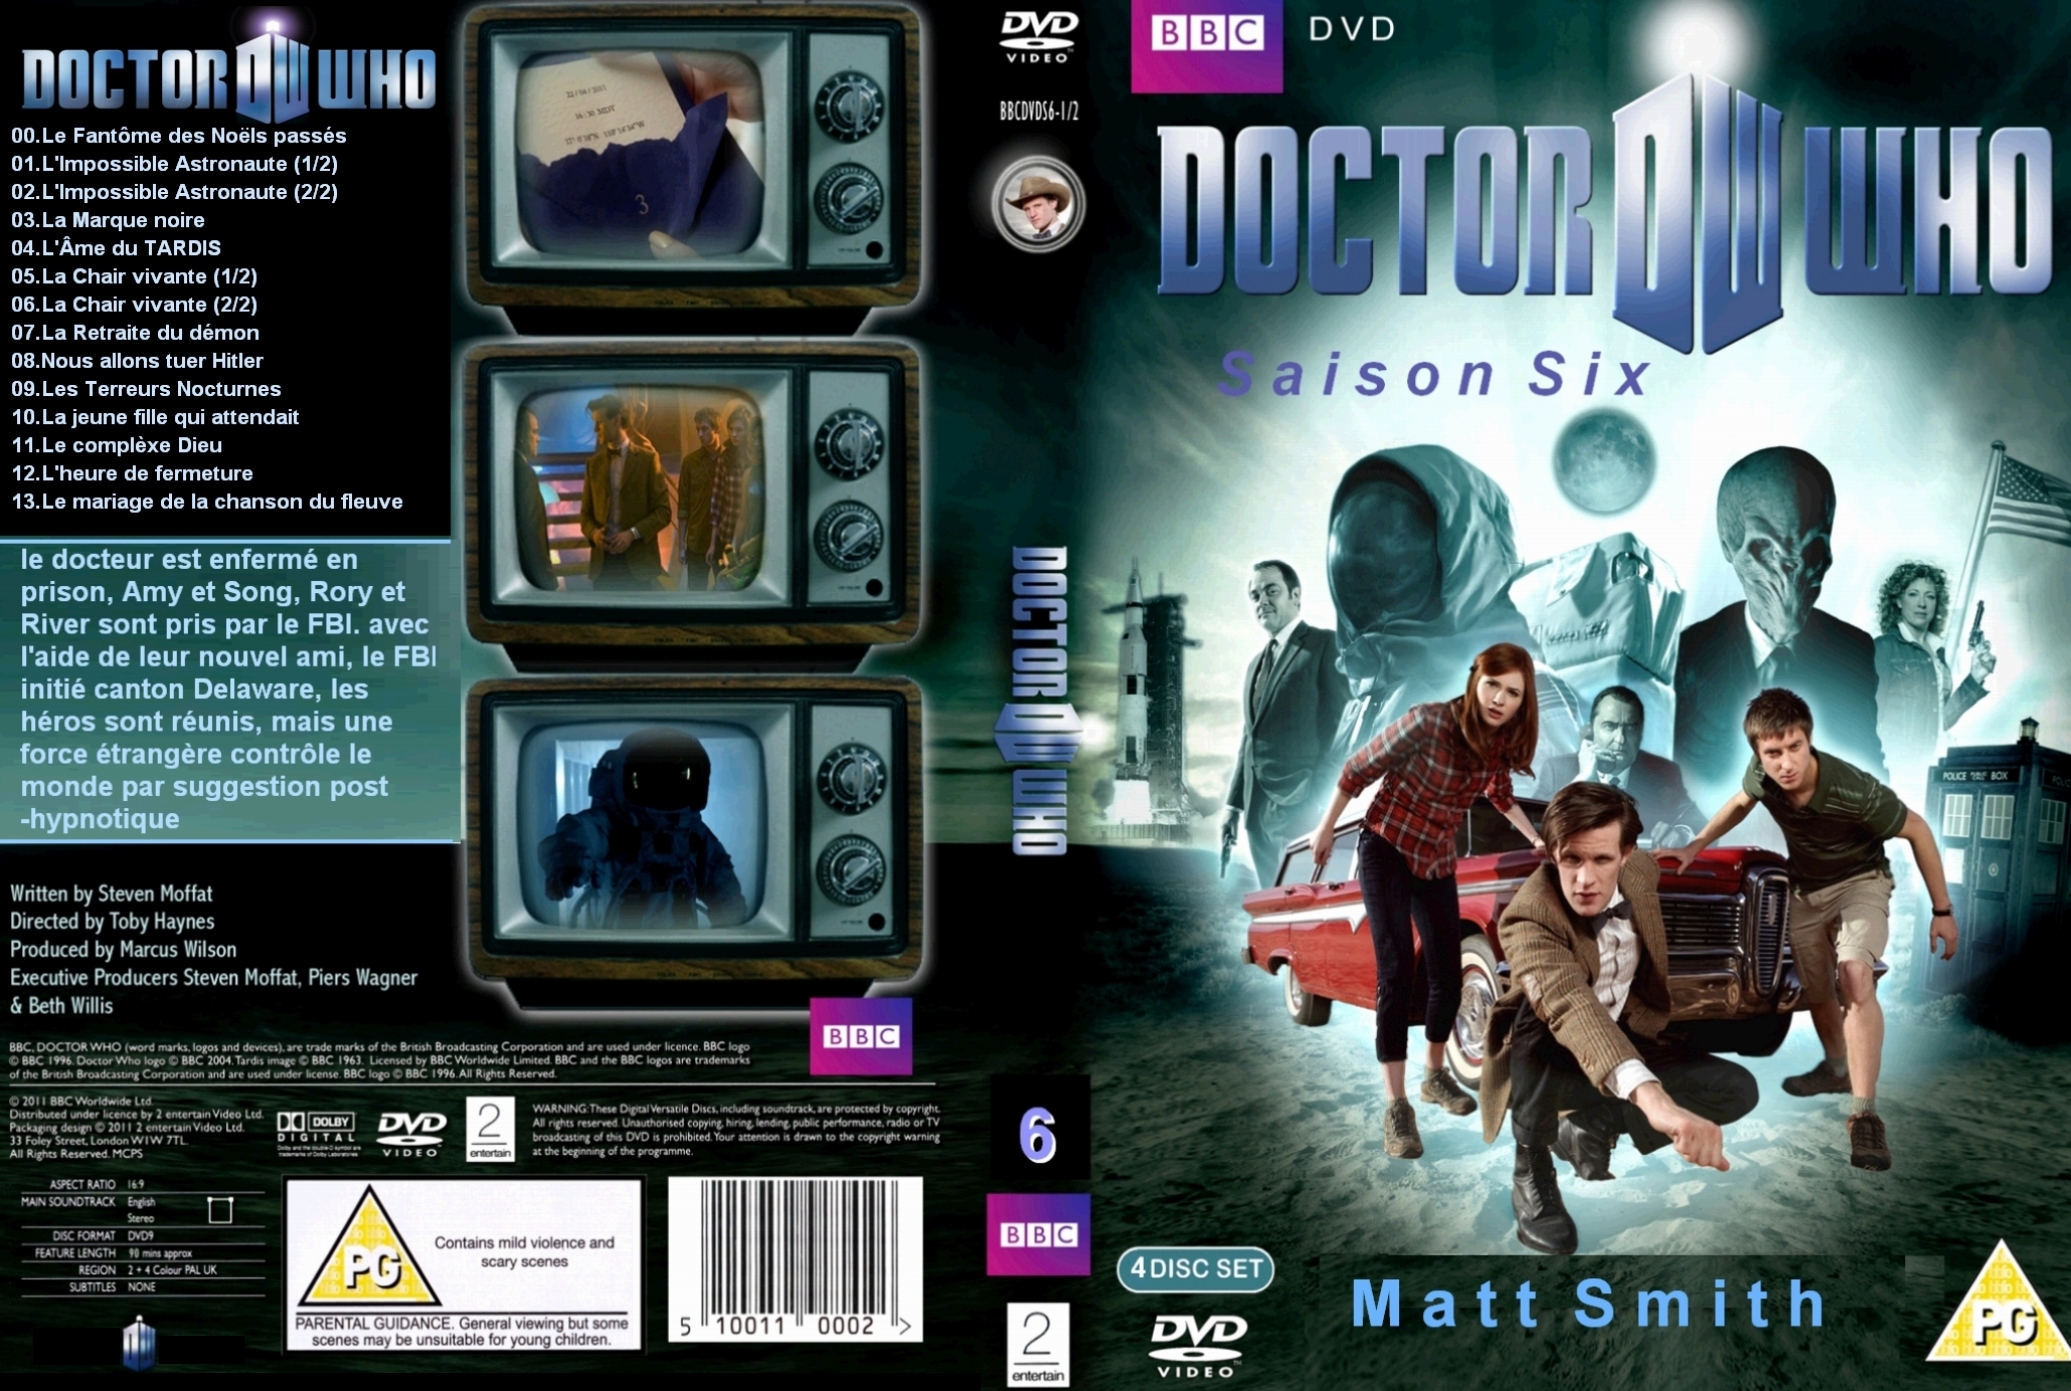 Jaquette DVD Doctor Who Saison 6 custom